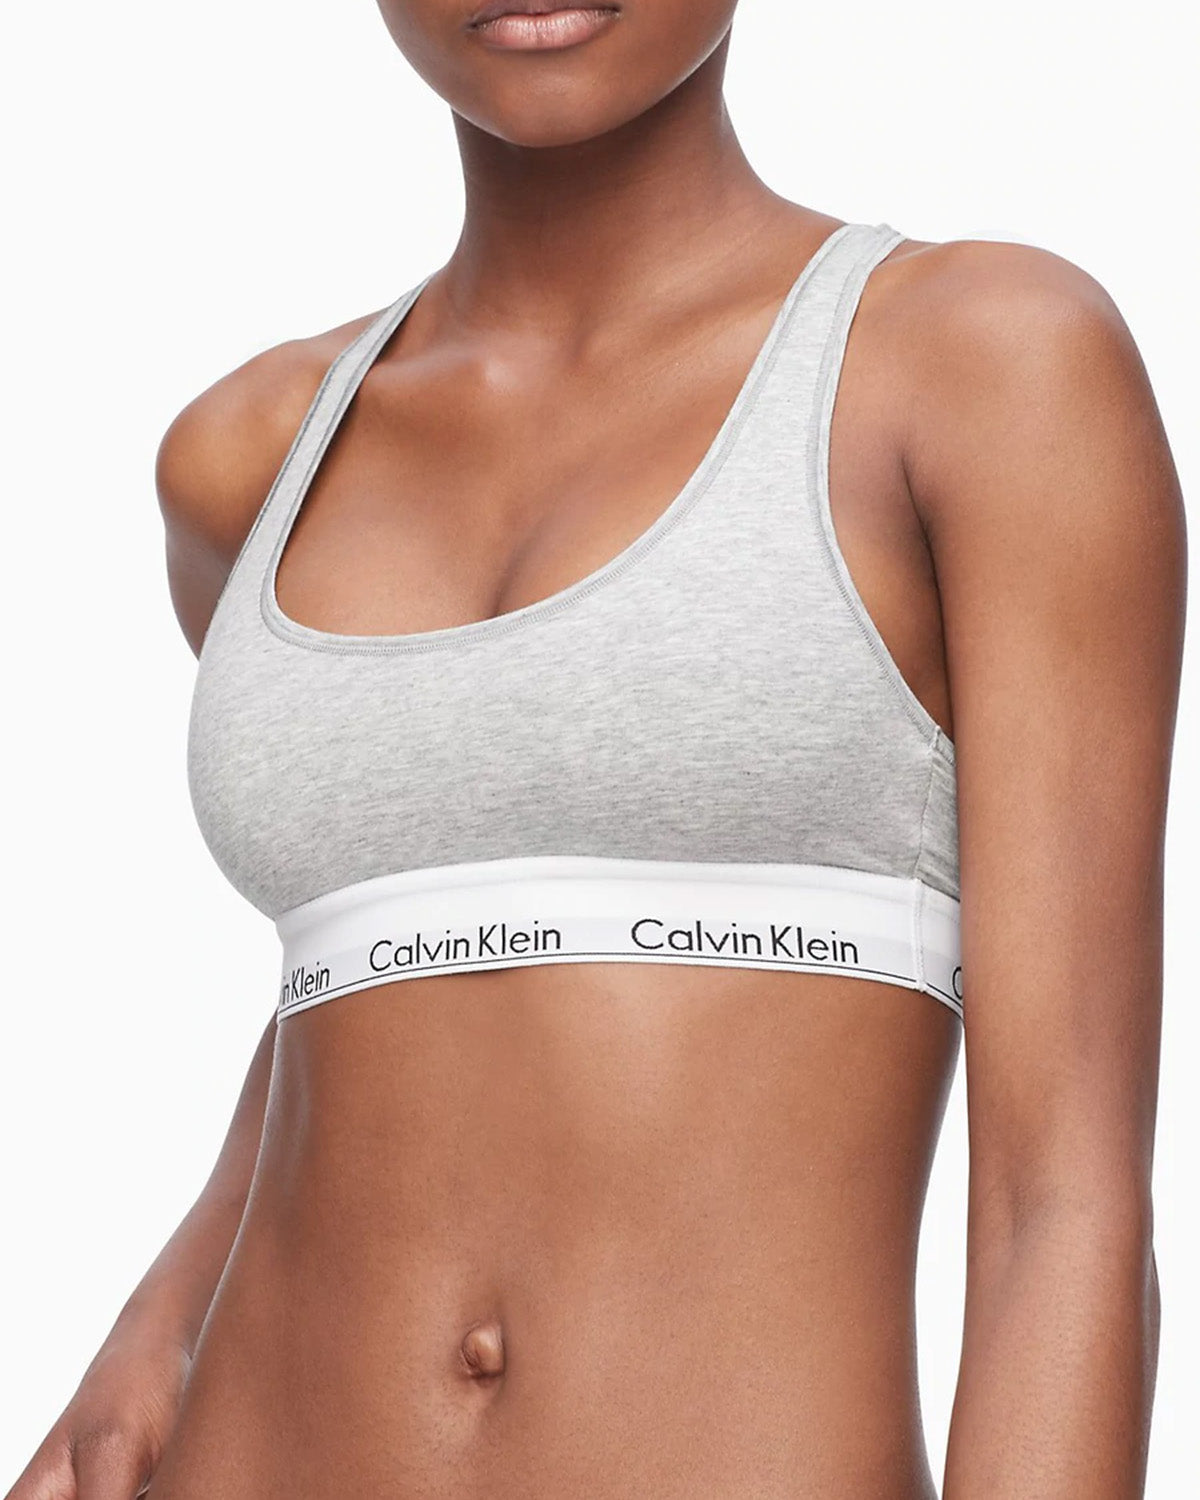 Plus Size Bralette - Modern Cotton Calvin Klein®